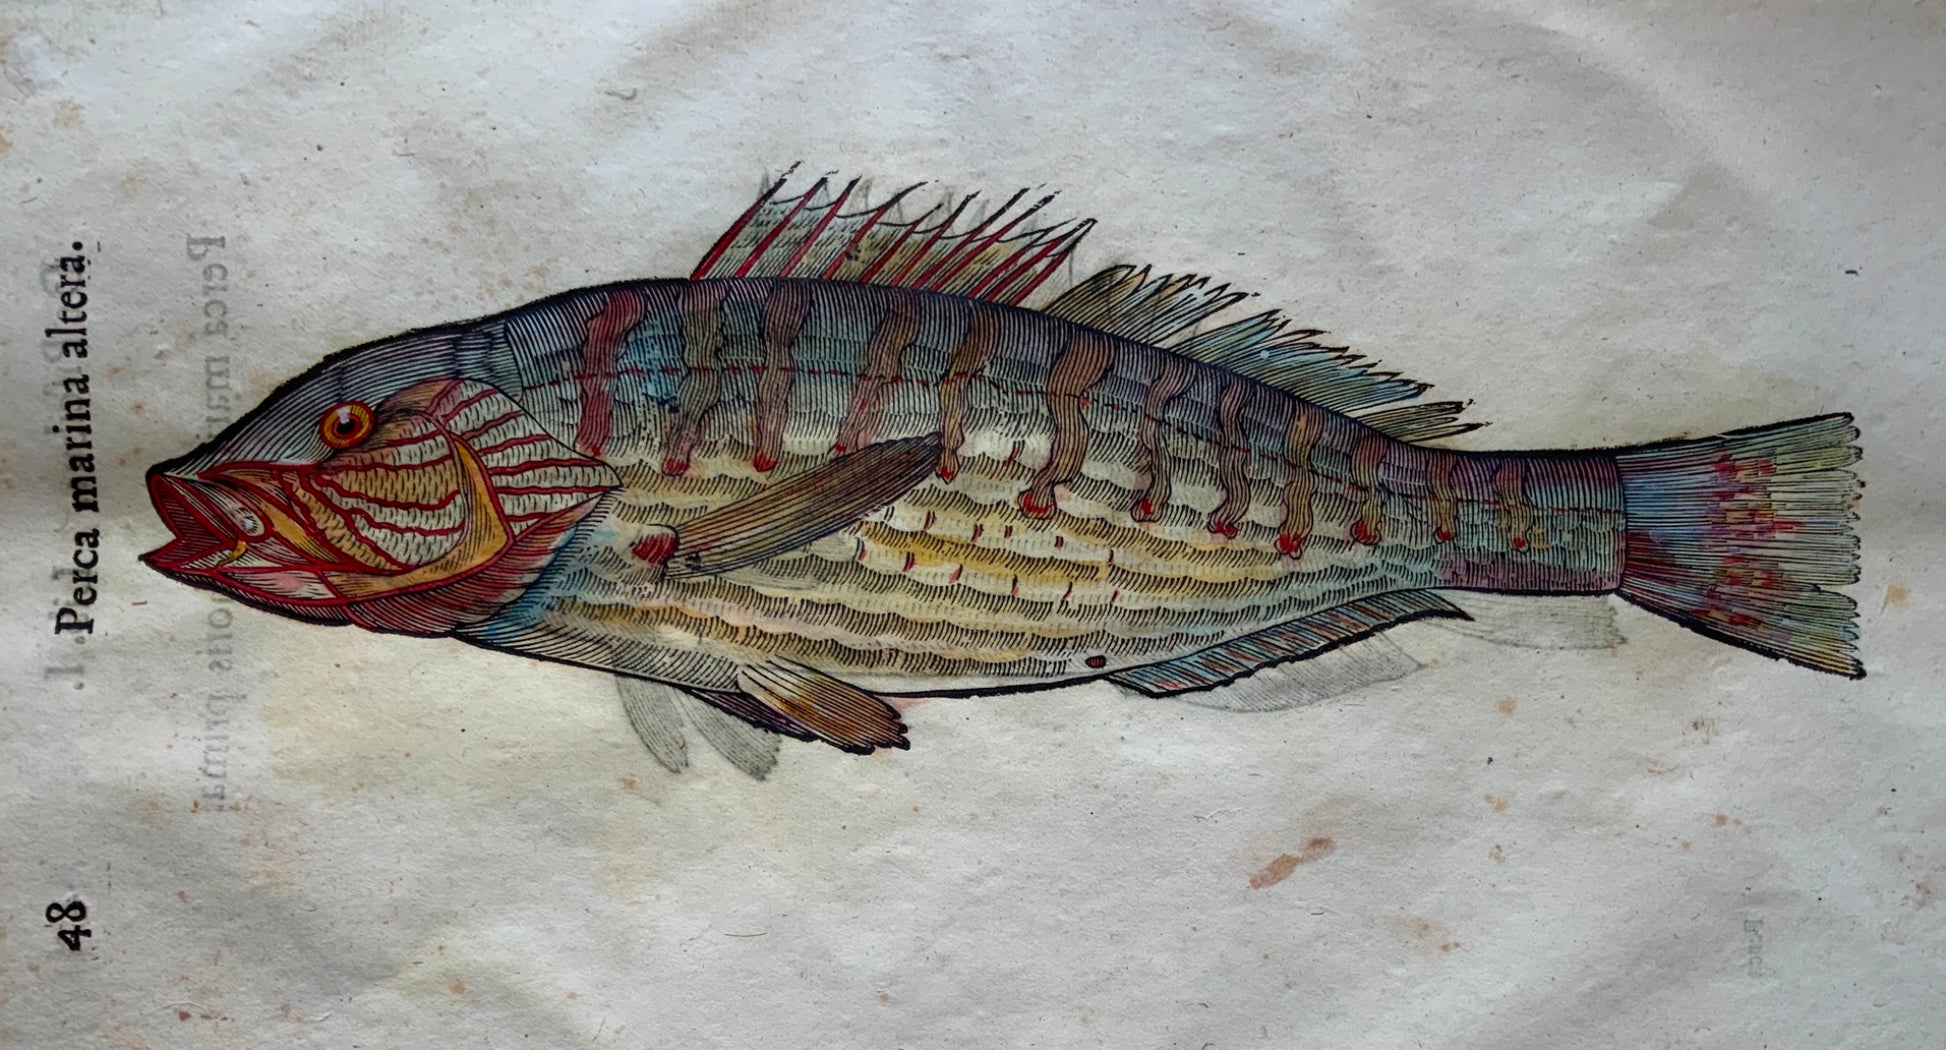 Coriolano; Aldrovandi - 2 Large folio woodcut leaf - PERCH Fish - Handcol - 1638